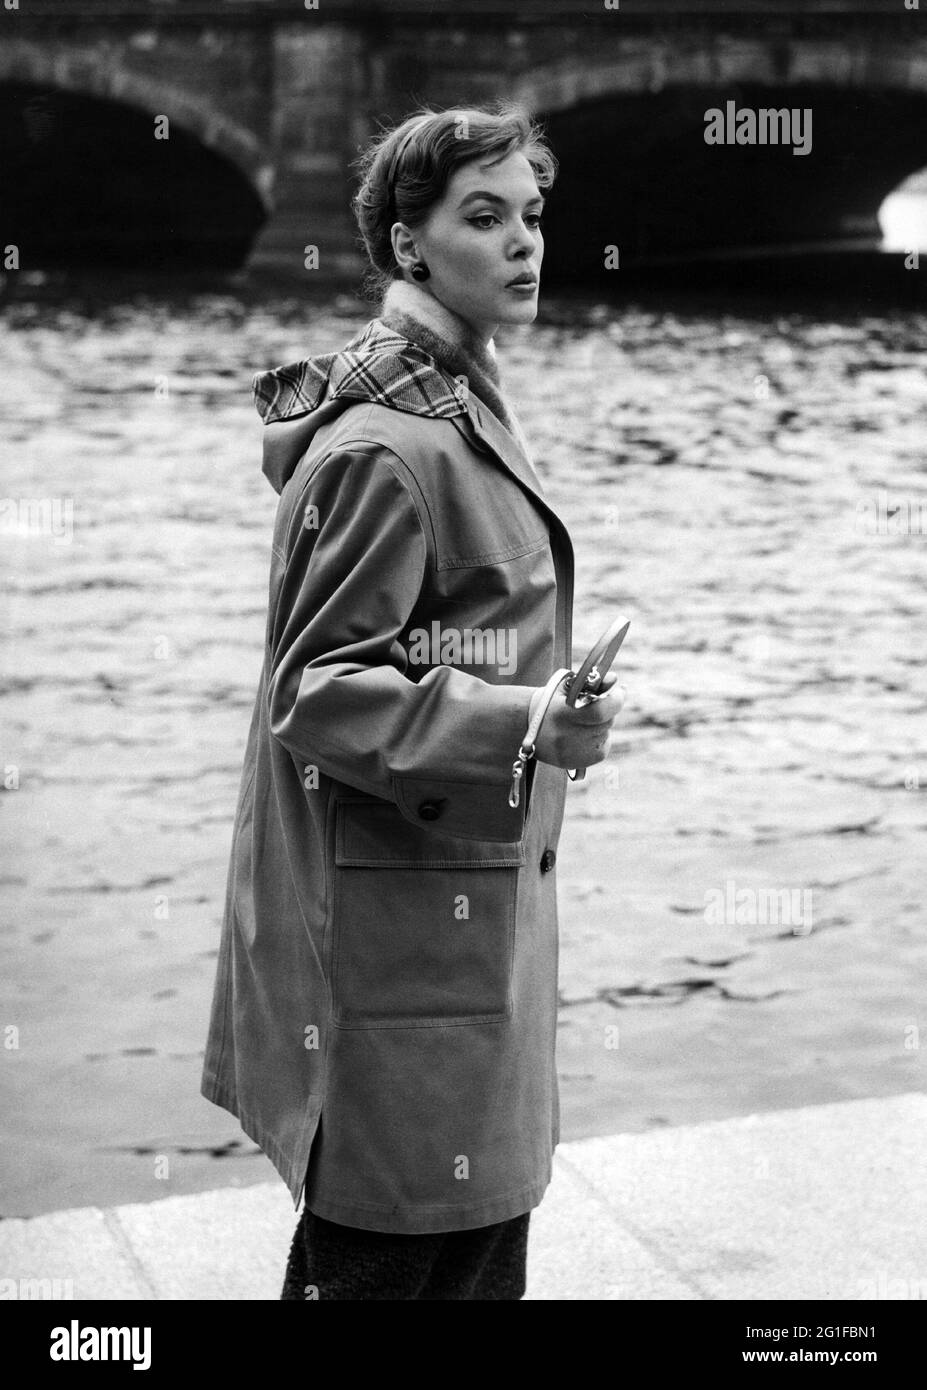 Mode, 60er Jahre, Regenbekleidung, Modell mit Klepper-Trenchcoat,  ZUSÄTZLICHE-RIGHTS-CLEARANCE-INFO-NOT-AVAILABLE Stockfotografie - Alamy